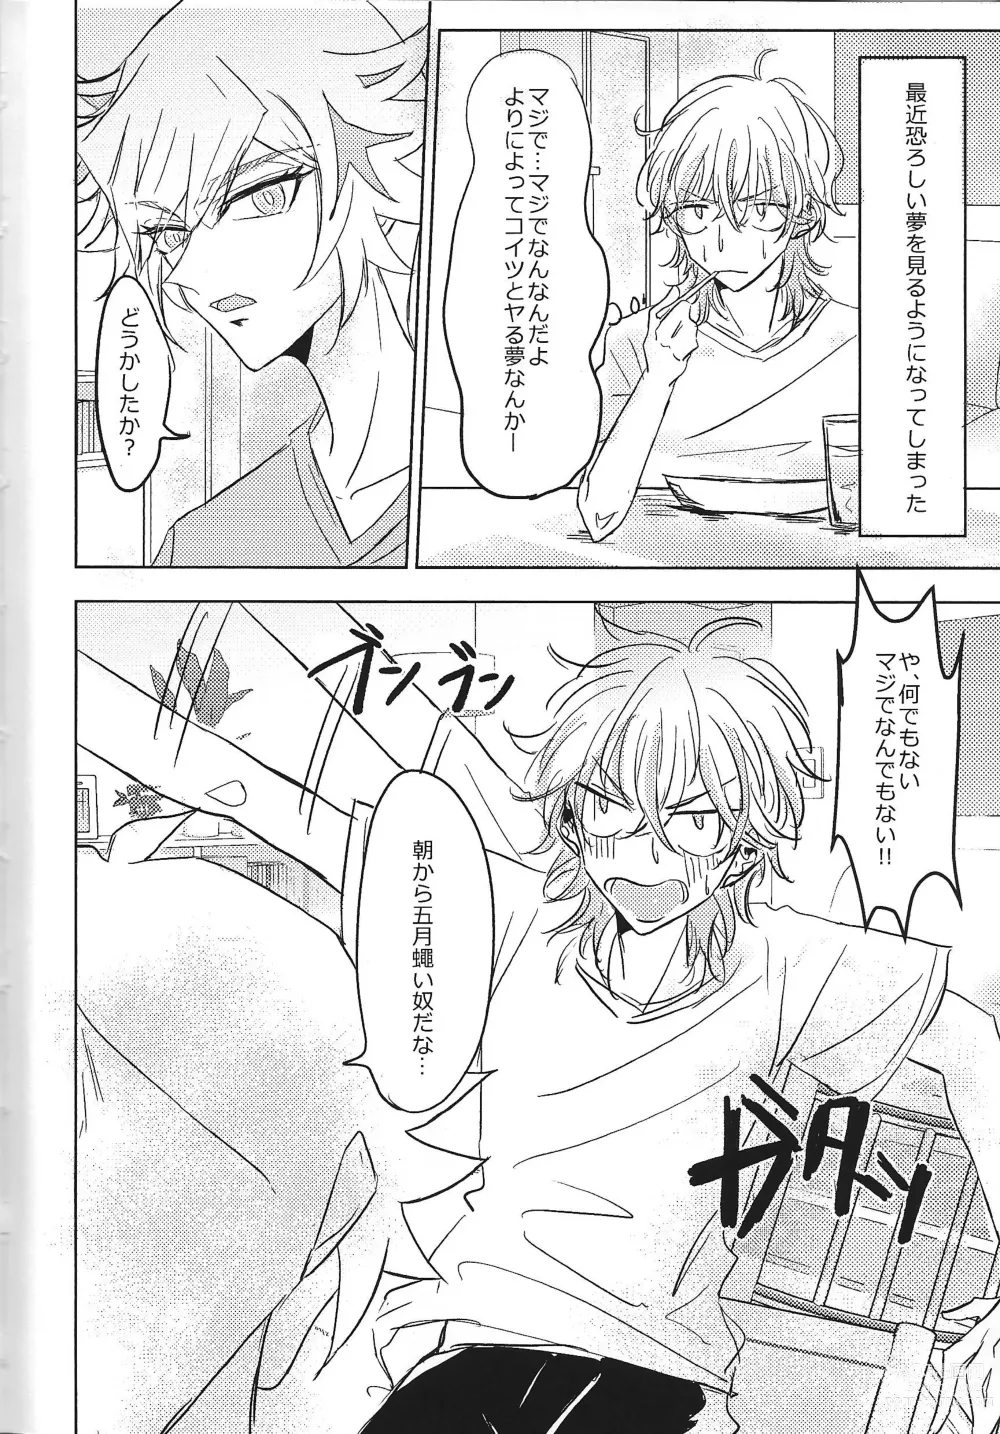 Page 5 of doujinshi Mikanseina